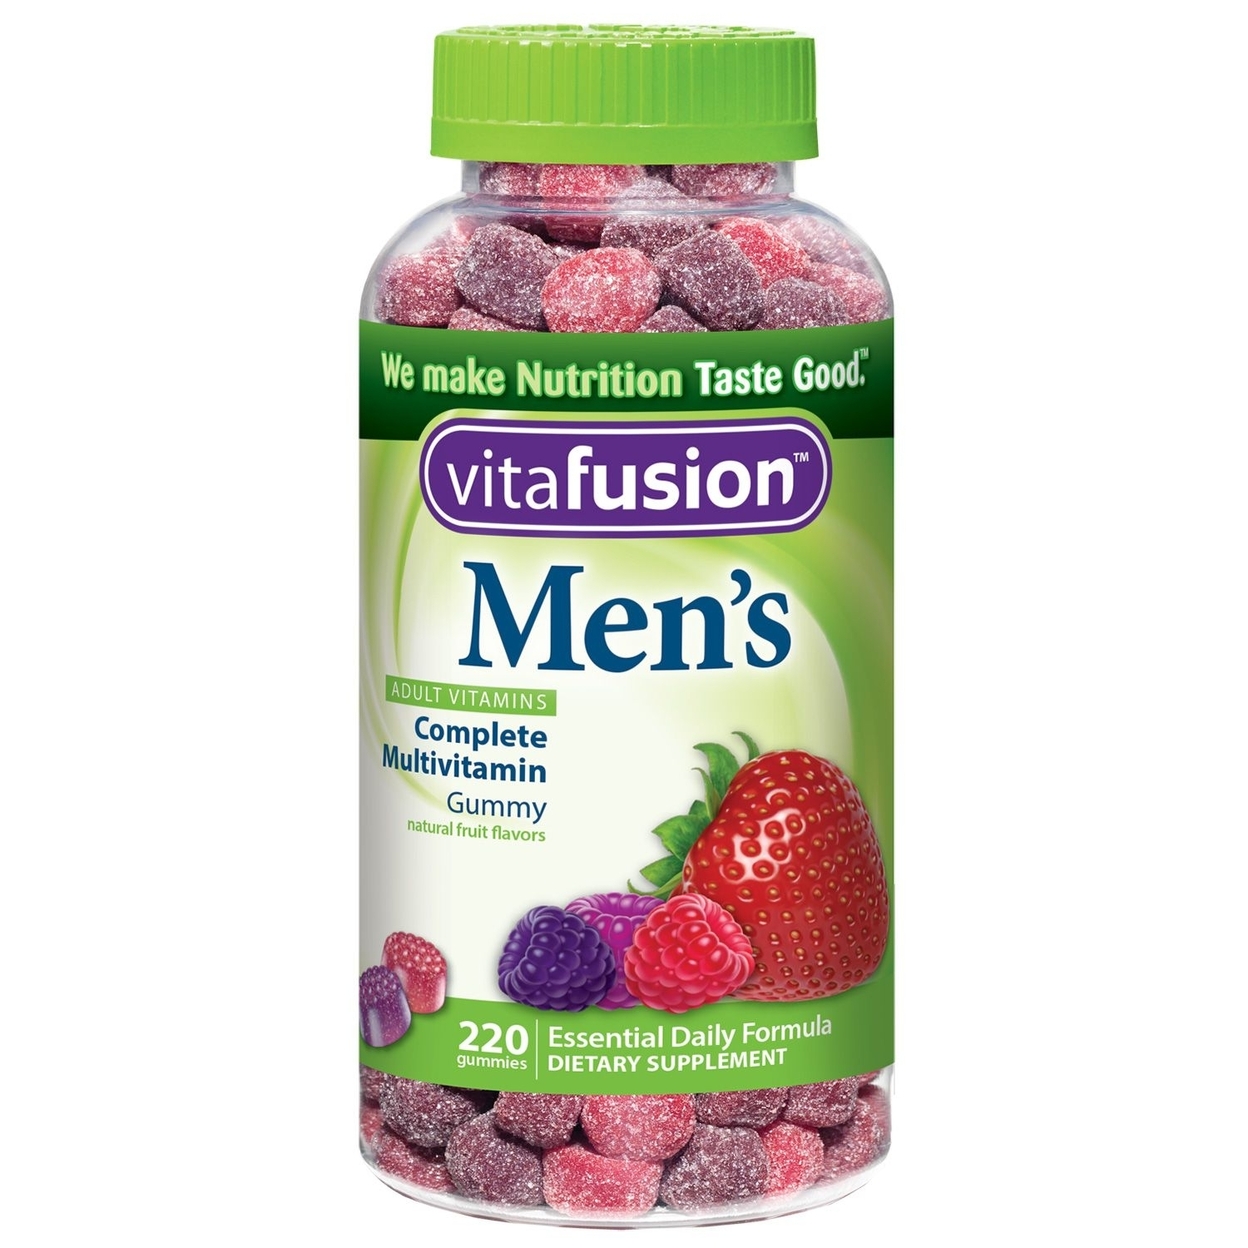 VitaFusion Adult Vitamins, Men's (220 Count)